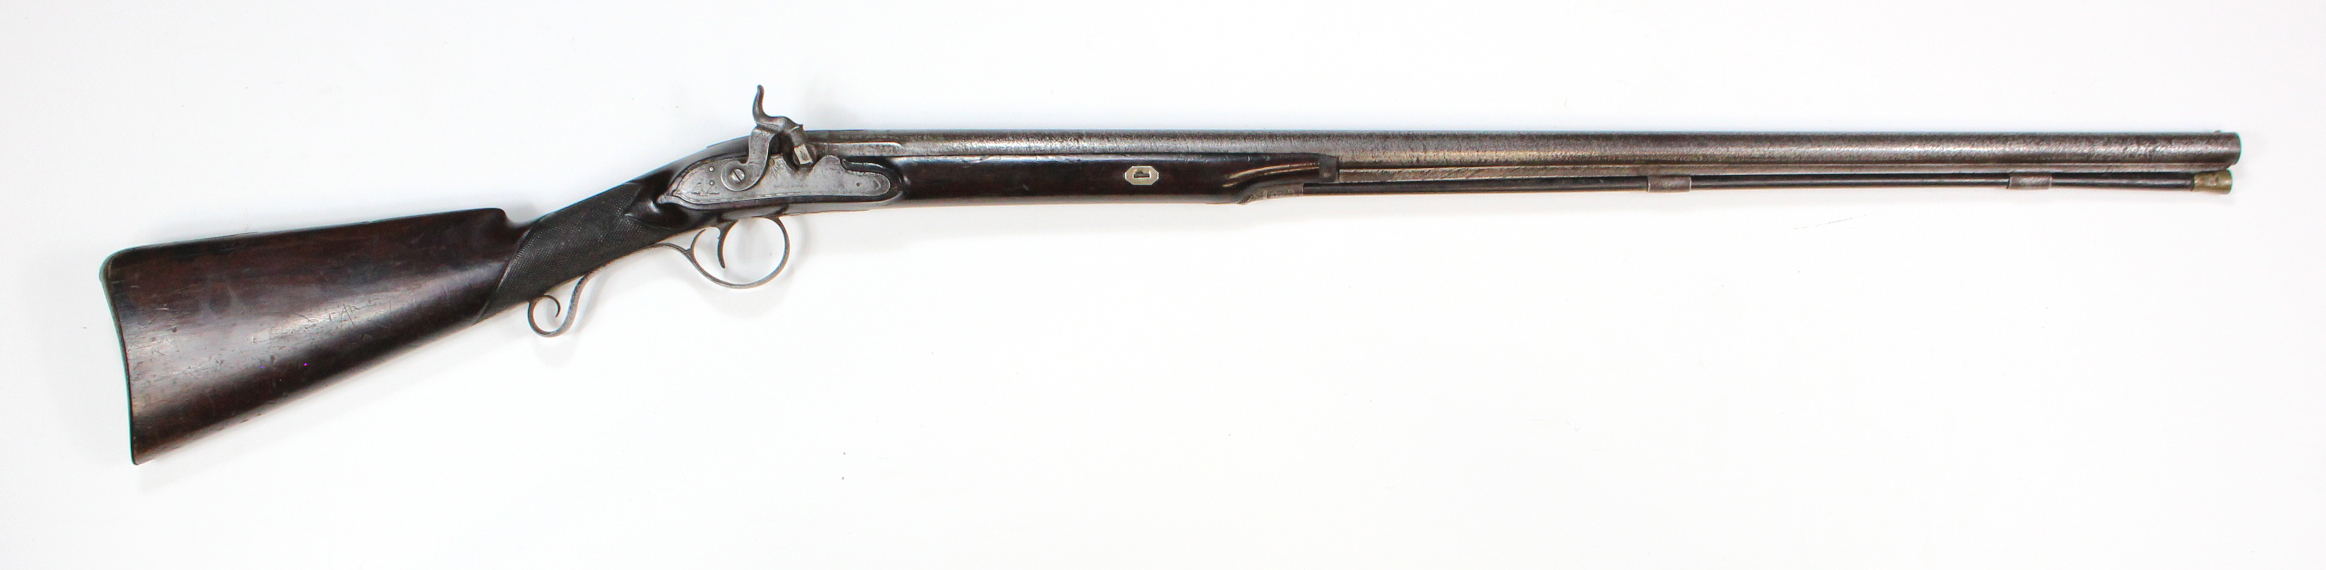 Percussion (conversion from flintlock) 16 bore, single barrel shotgun, marked 'Brasher' on the